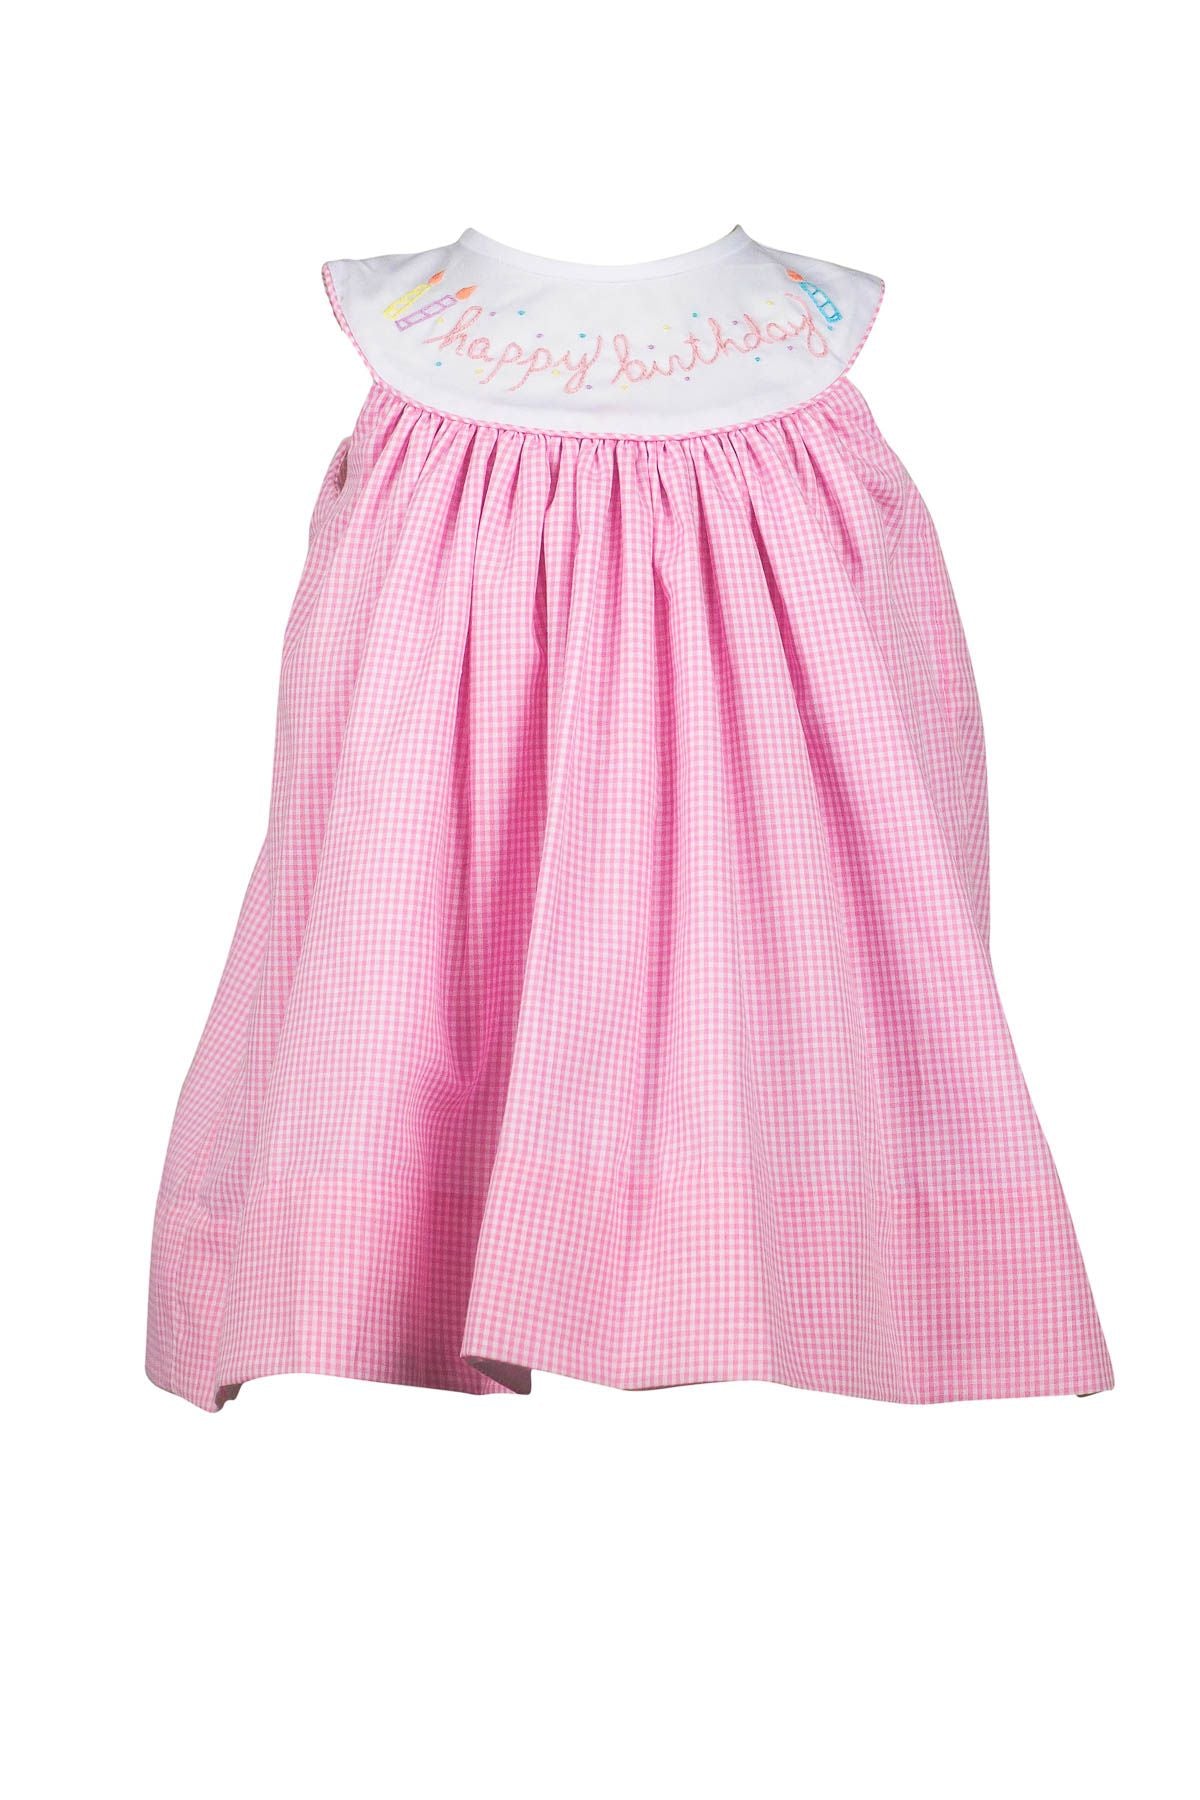 Proper Peony - Birthday Dress Pink Gingham